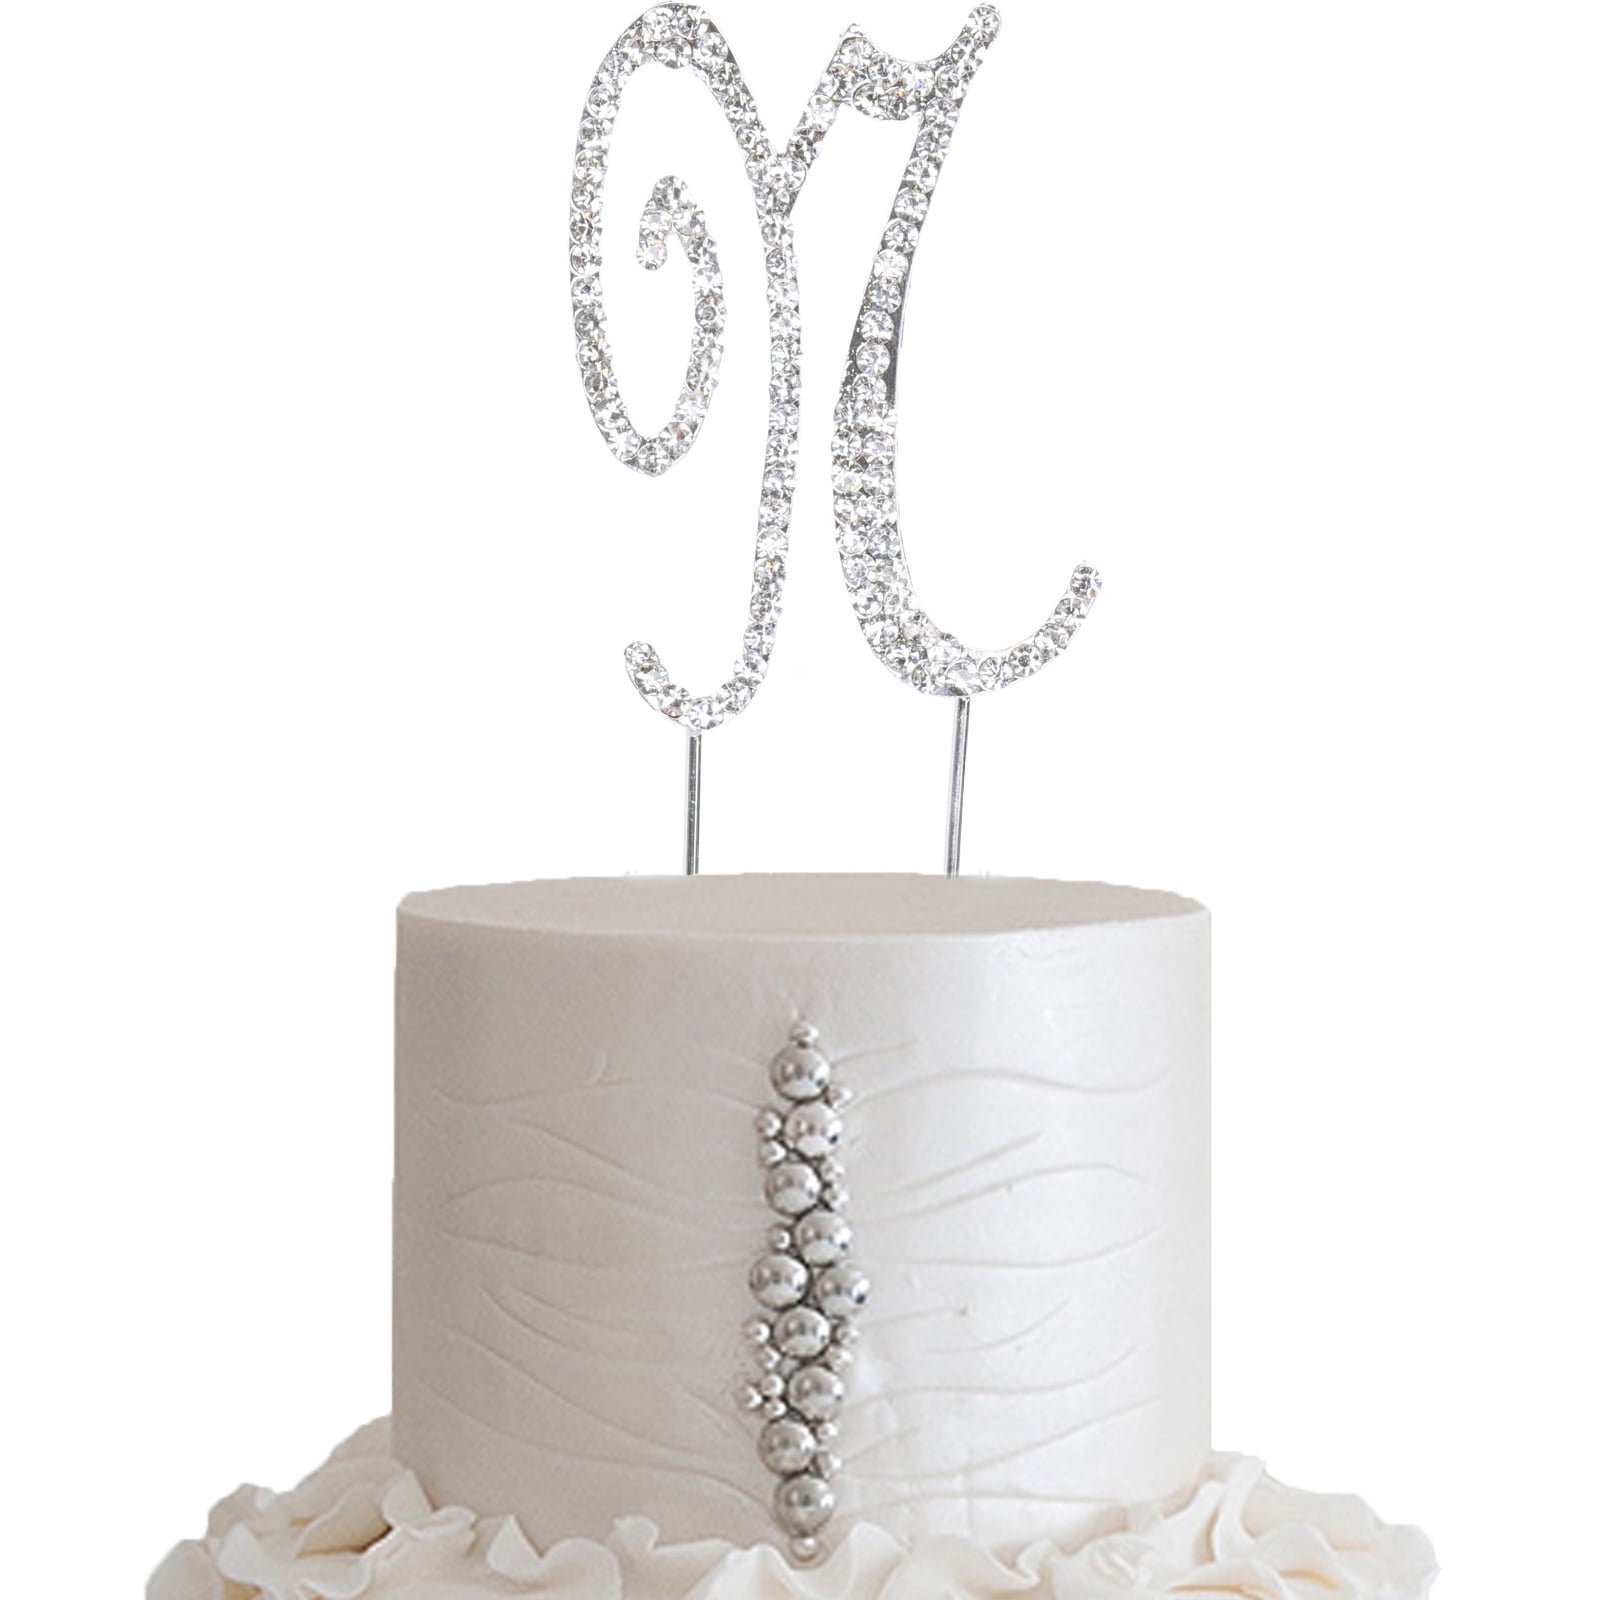 Balsacircle Silver Cake Topper 2 5 Tall Rhinestone Personalized Wedding Party Monogram Dessert Decorations